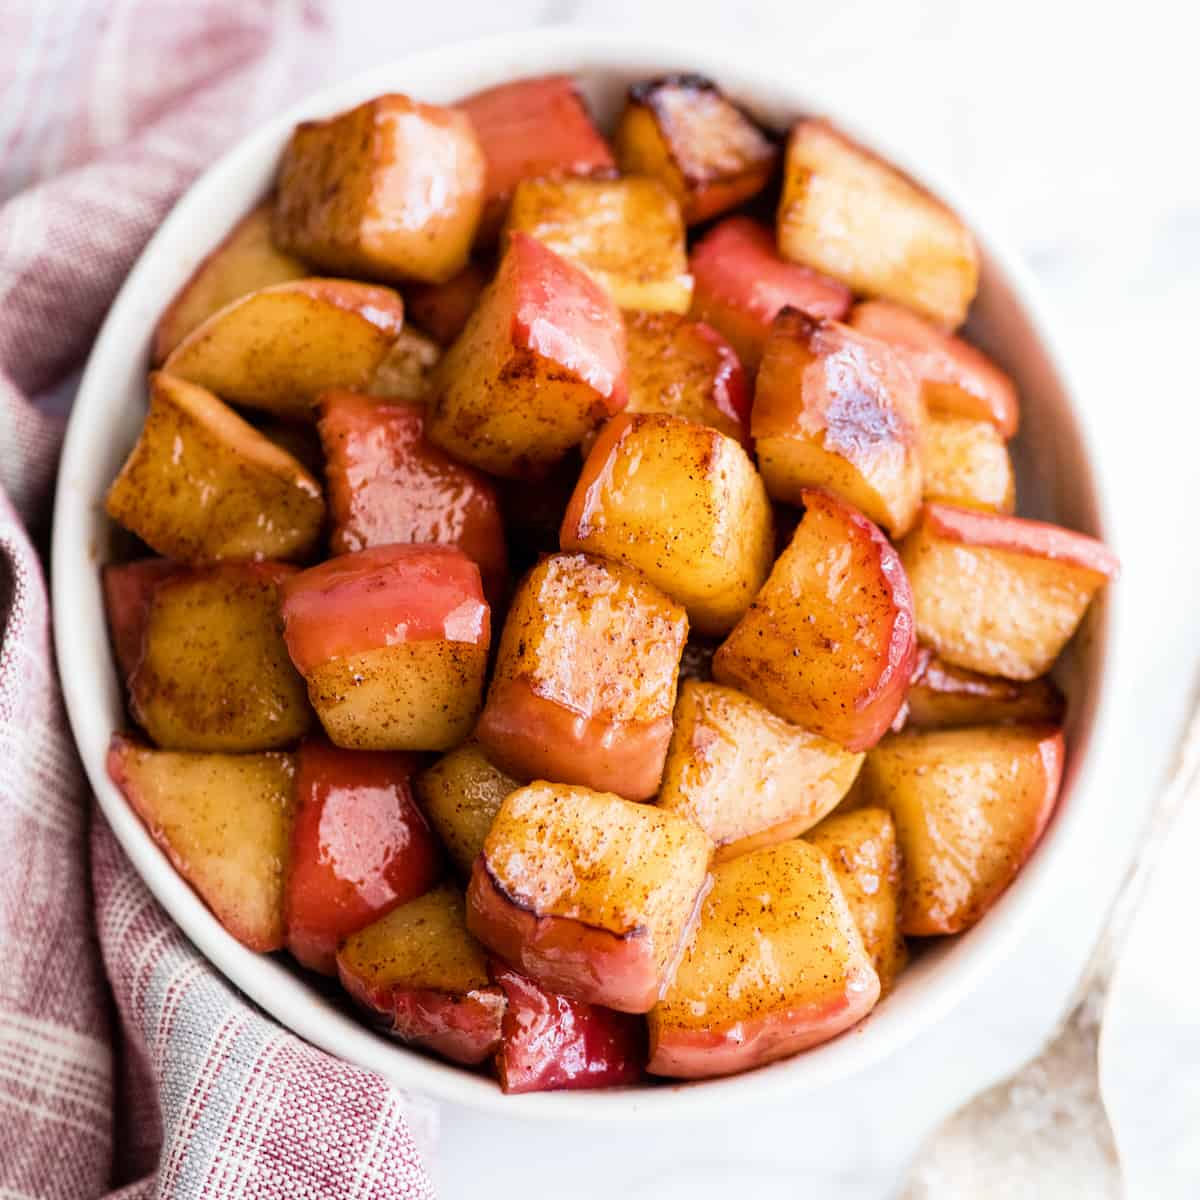 https://joyfoodsunshine.com/wp-content/uploads/2019/09/easy-cinnamon-apples-recipe-4.jpg